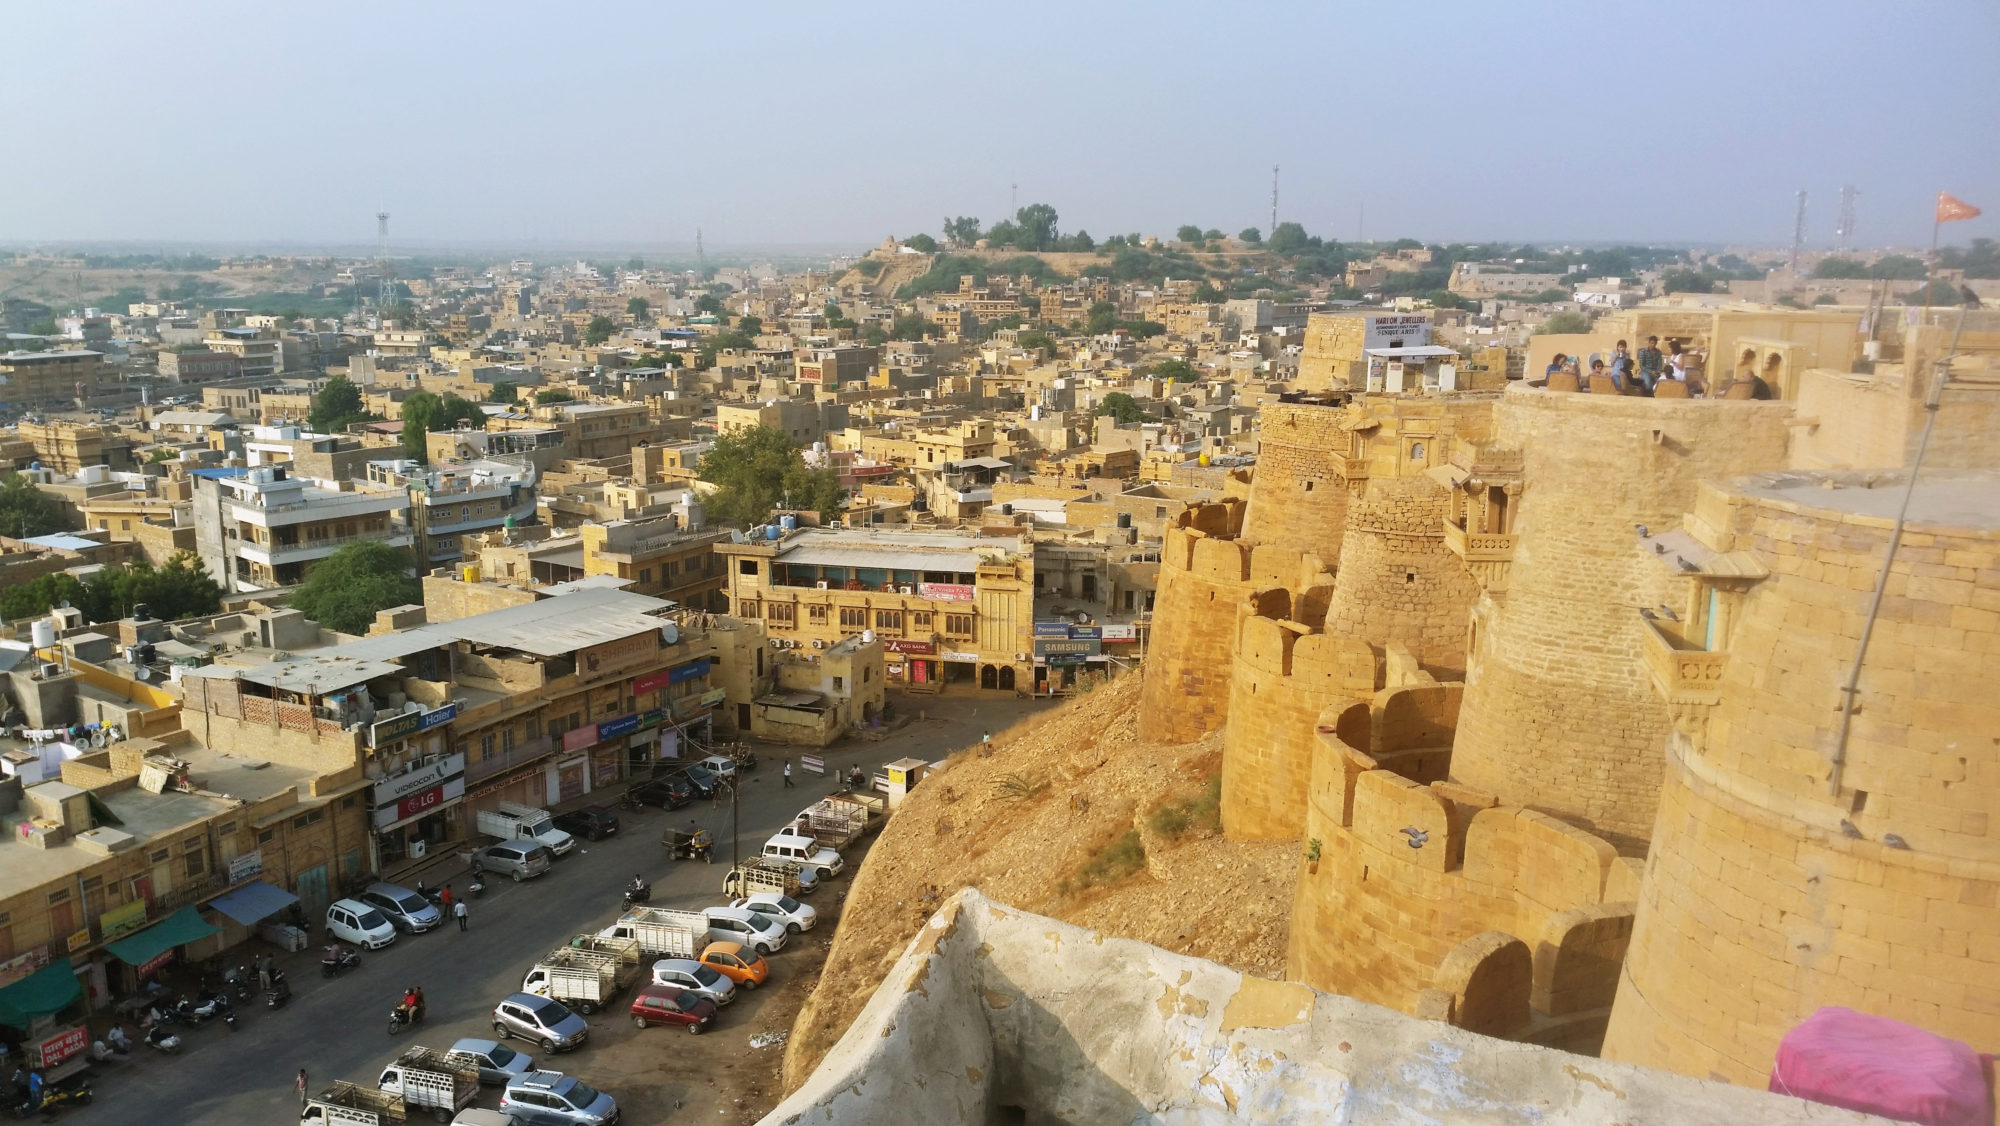 The Fort at Jaisalmer